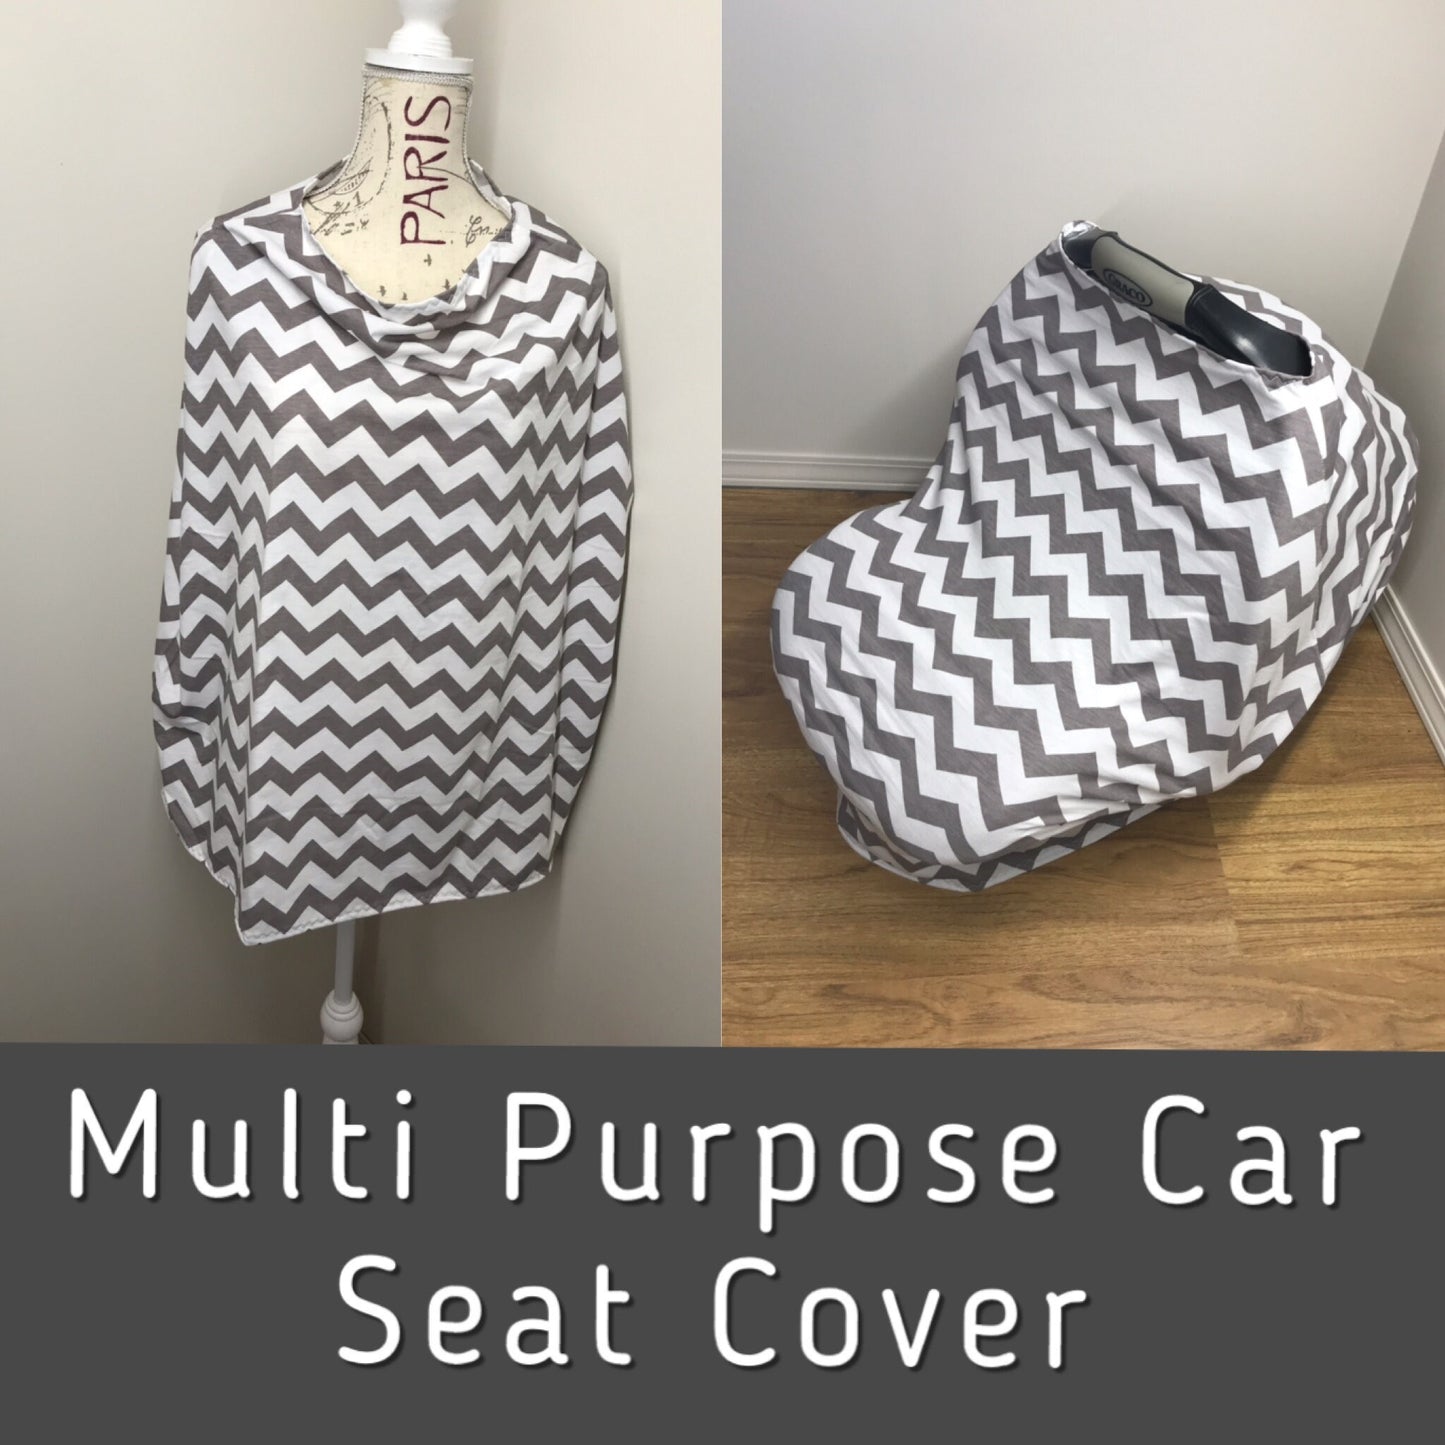 Multi purpose car seat cover